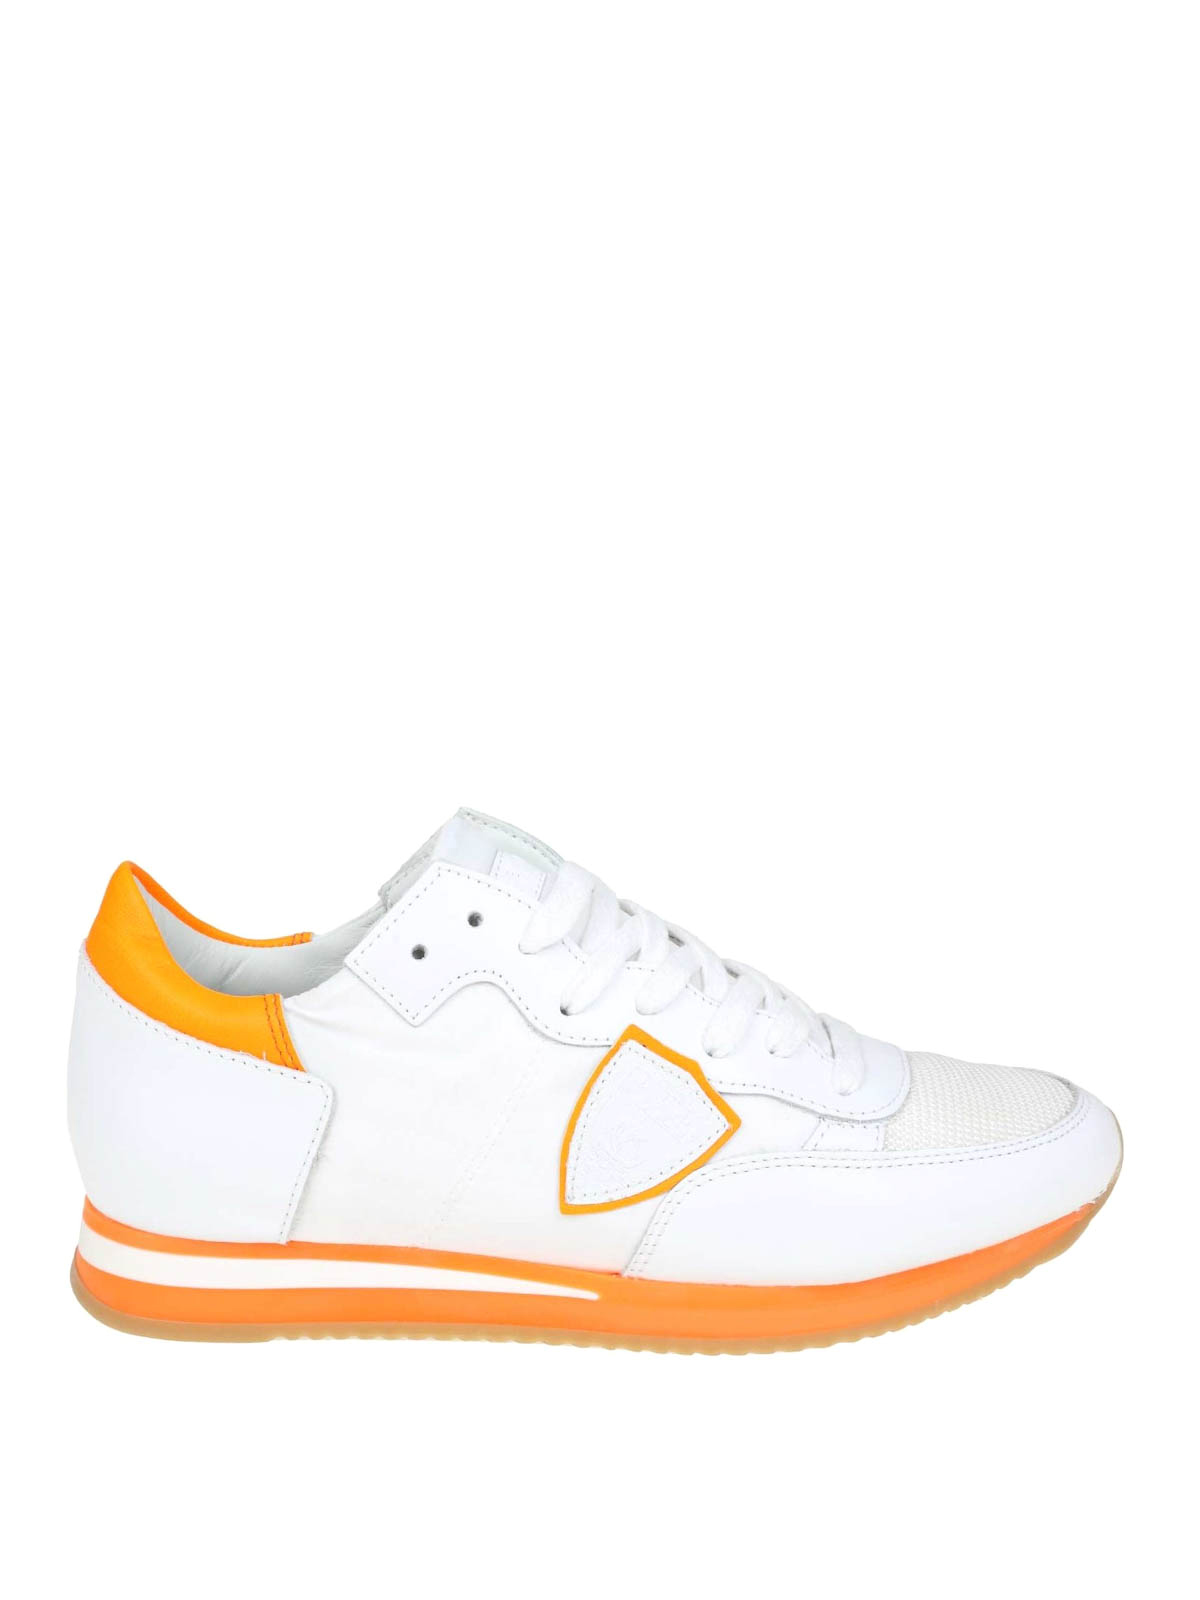 Philippe Model - Sneaker Tropez bianche e arancioni - sneakers - TRLDNV04